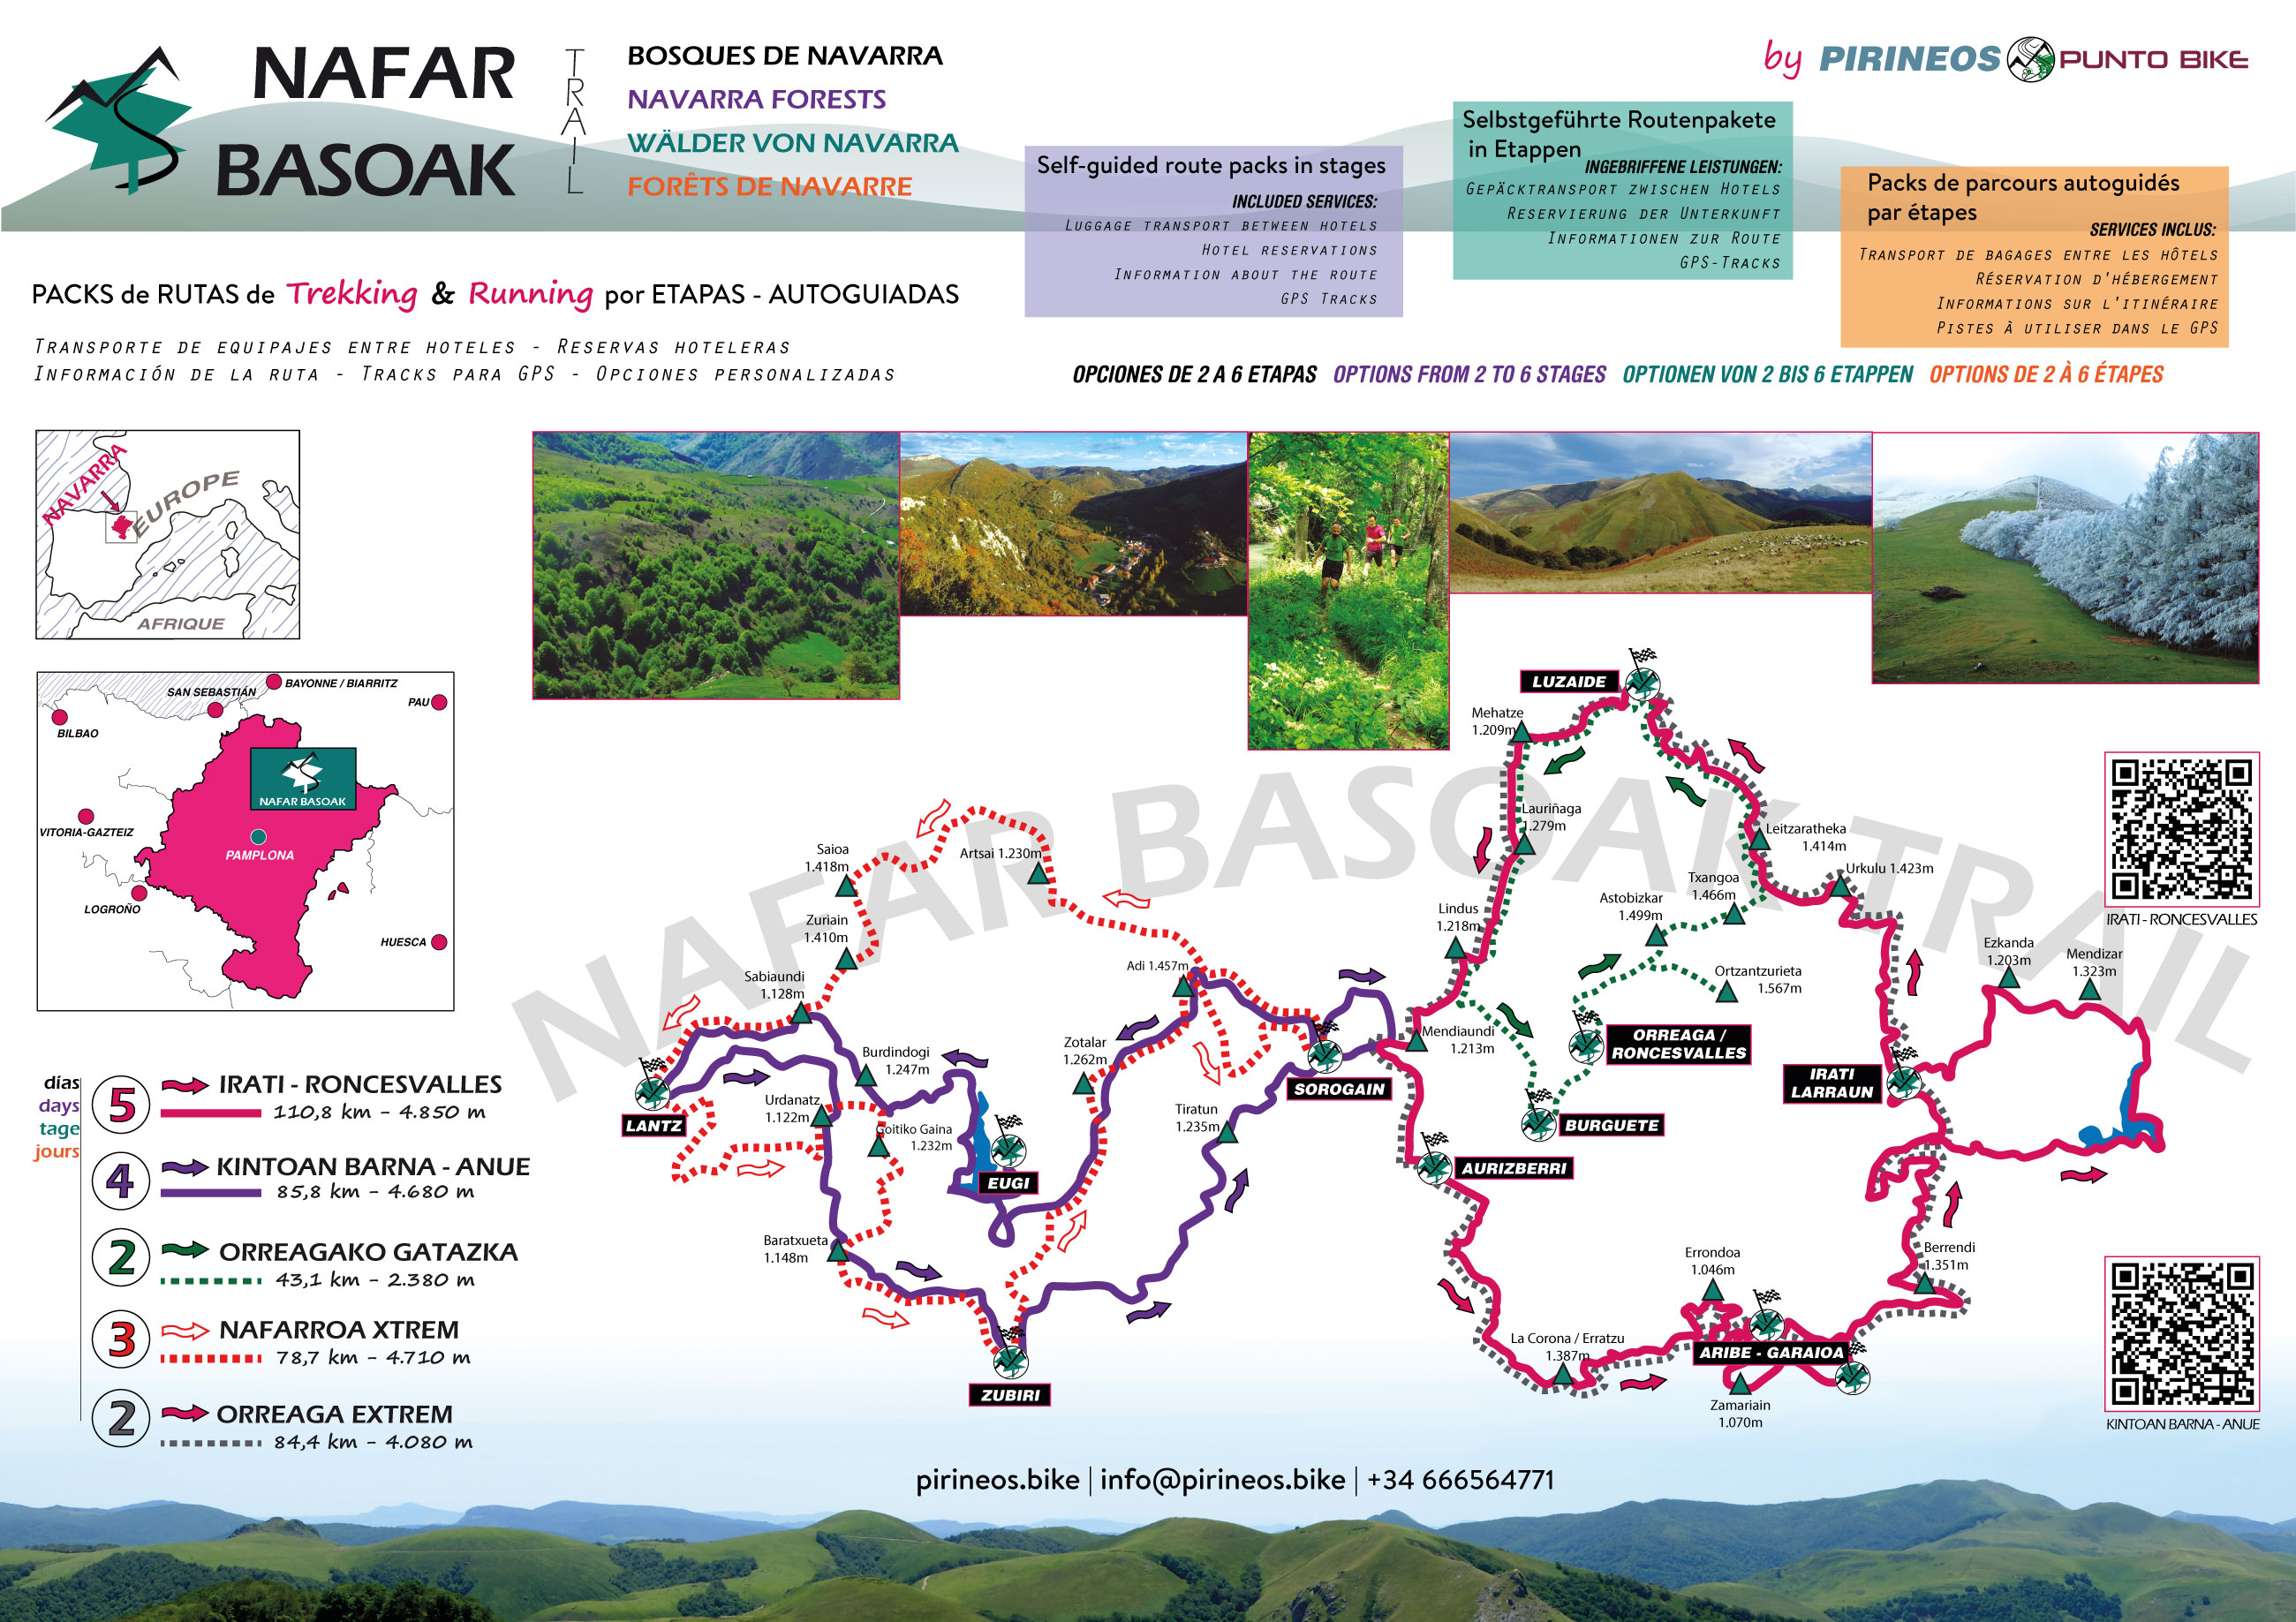 Folleto publicitario Nafar Basoak Trail